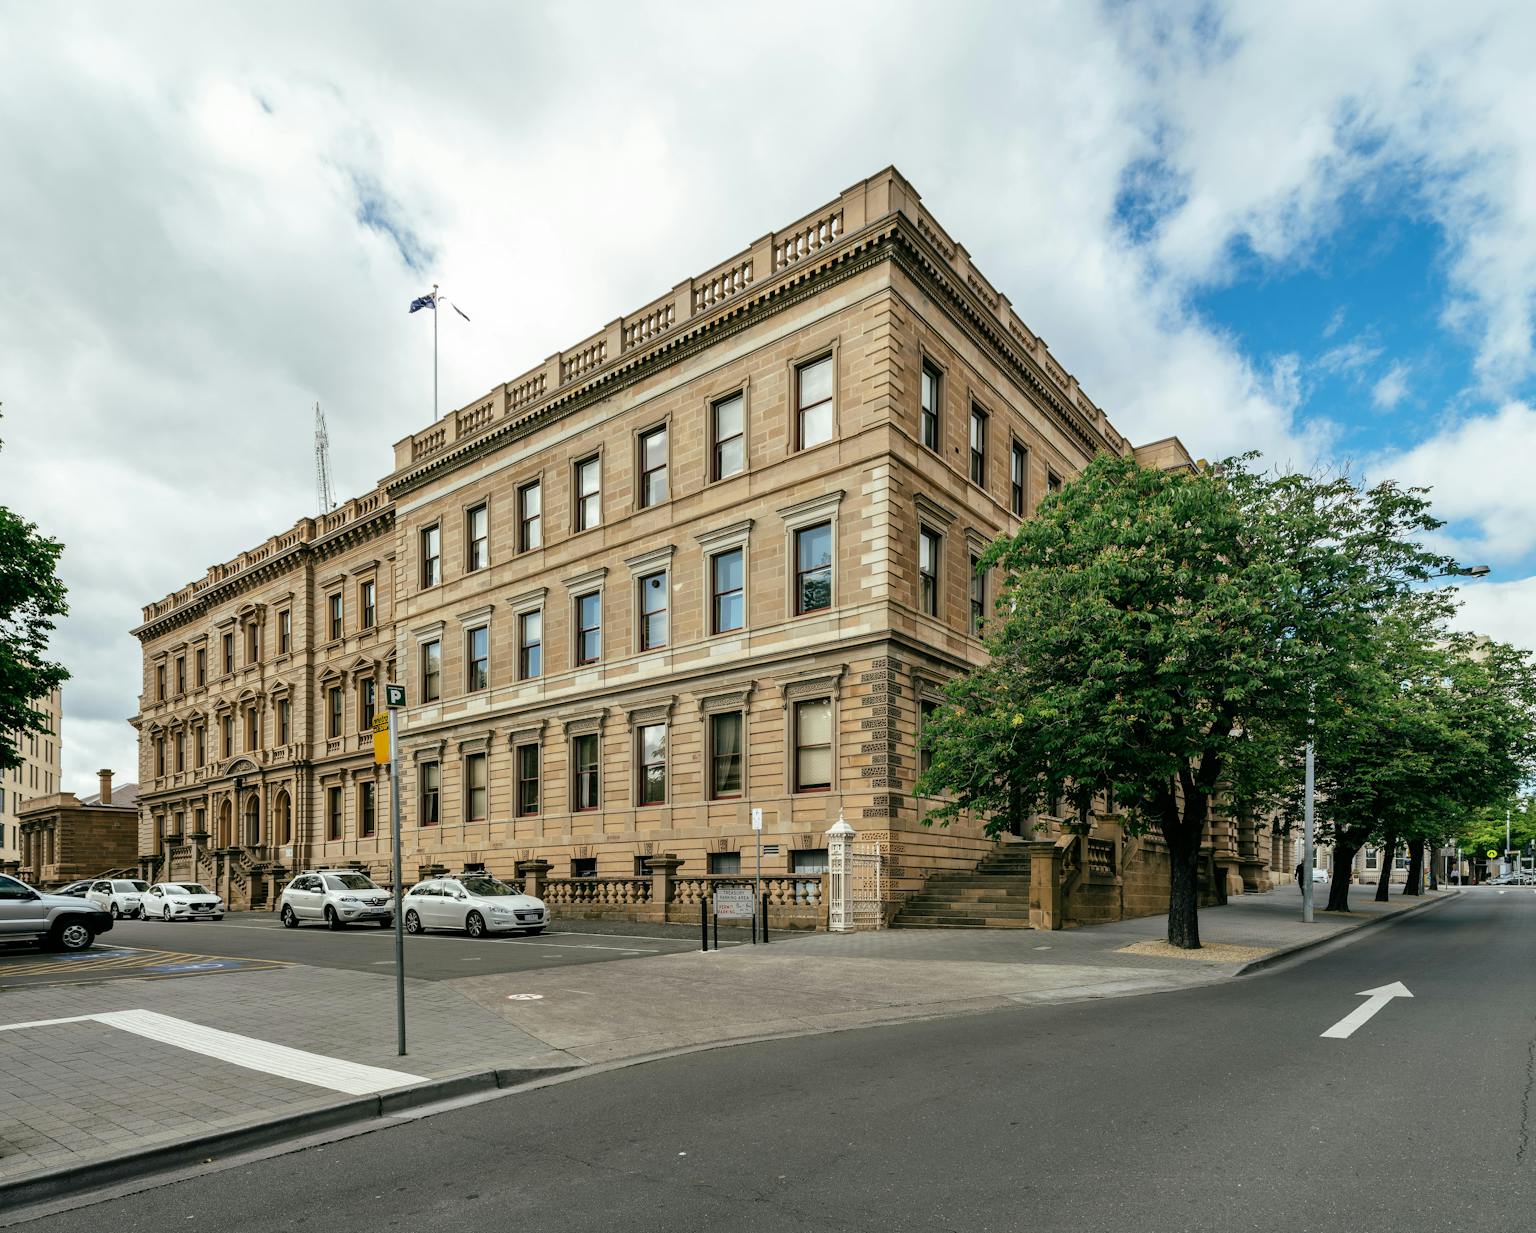 The Treasury Complex and Public Buildings in Hobart, Australia.